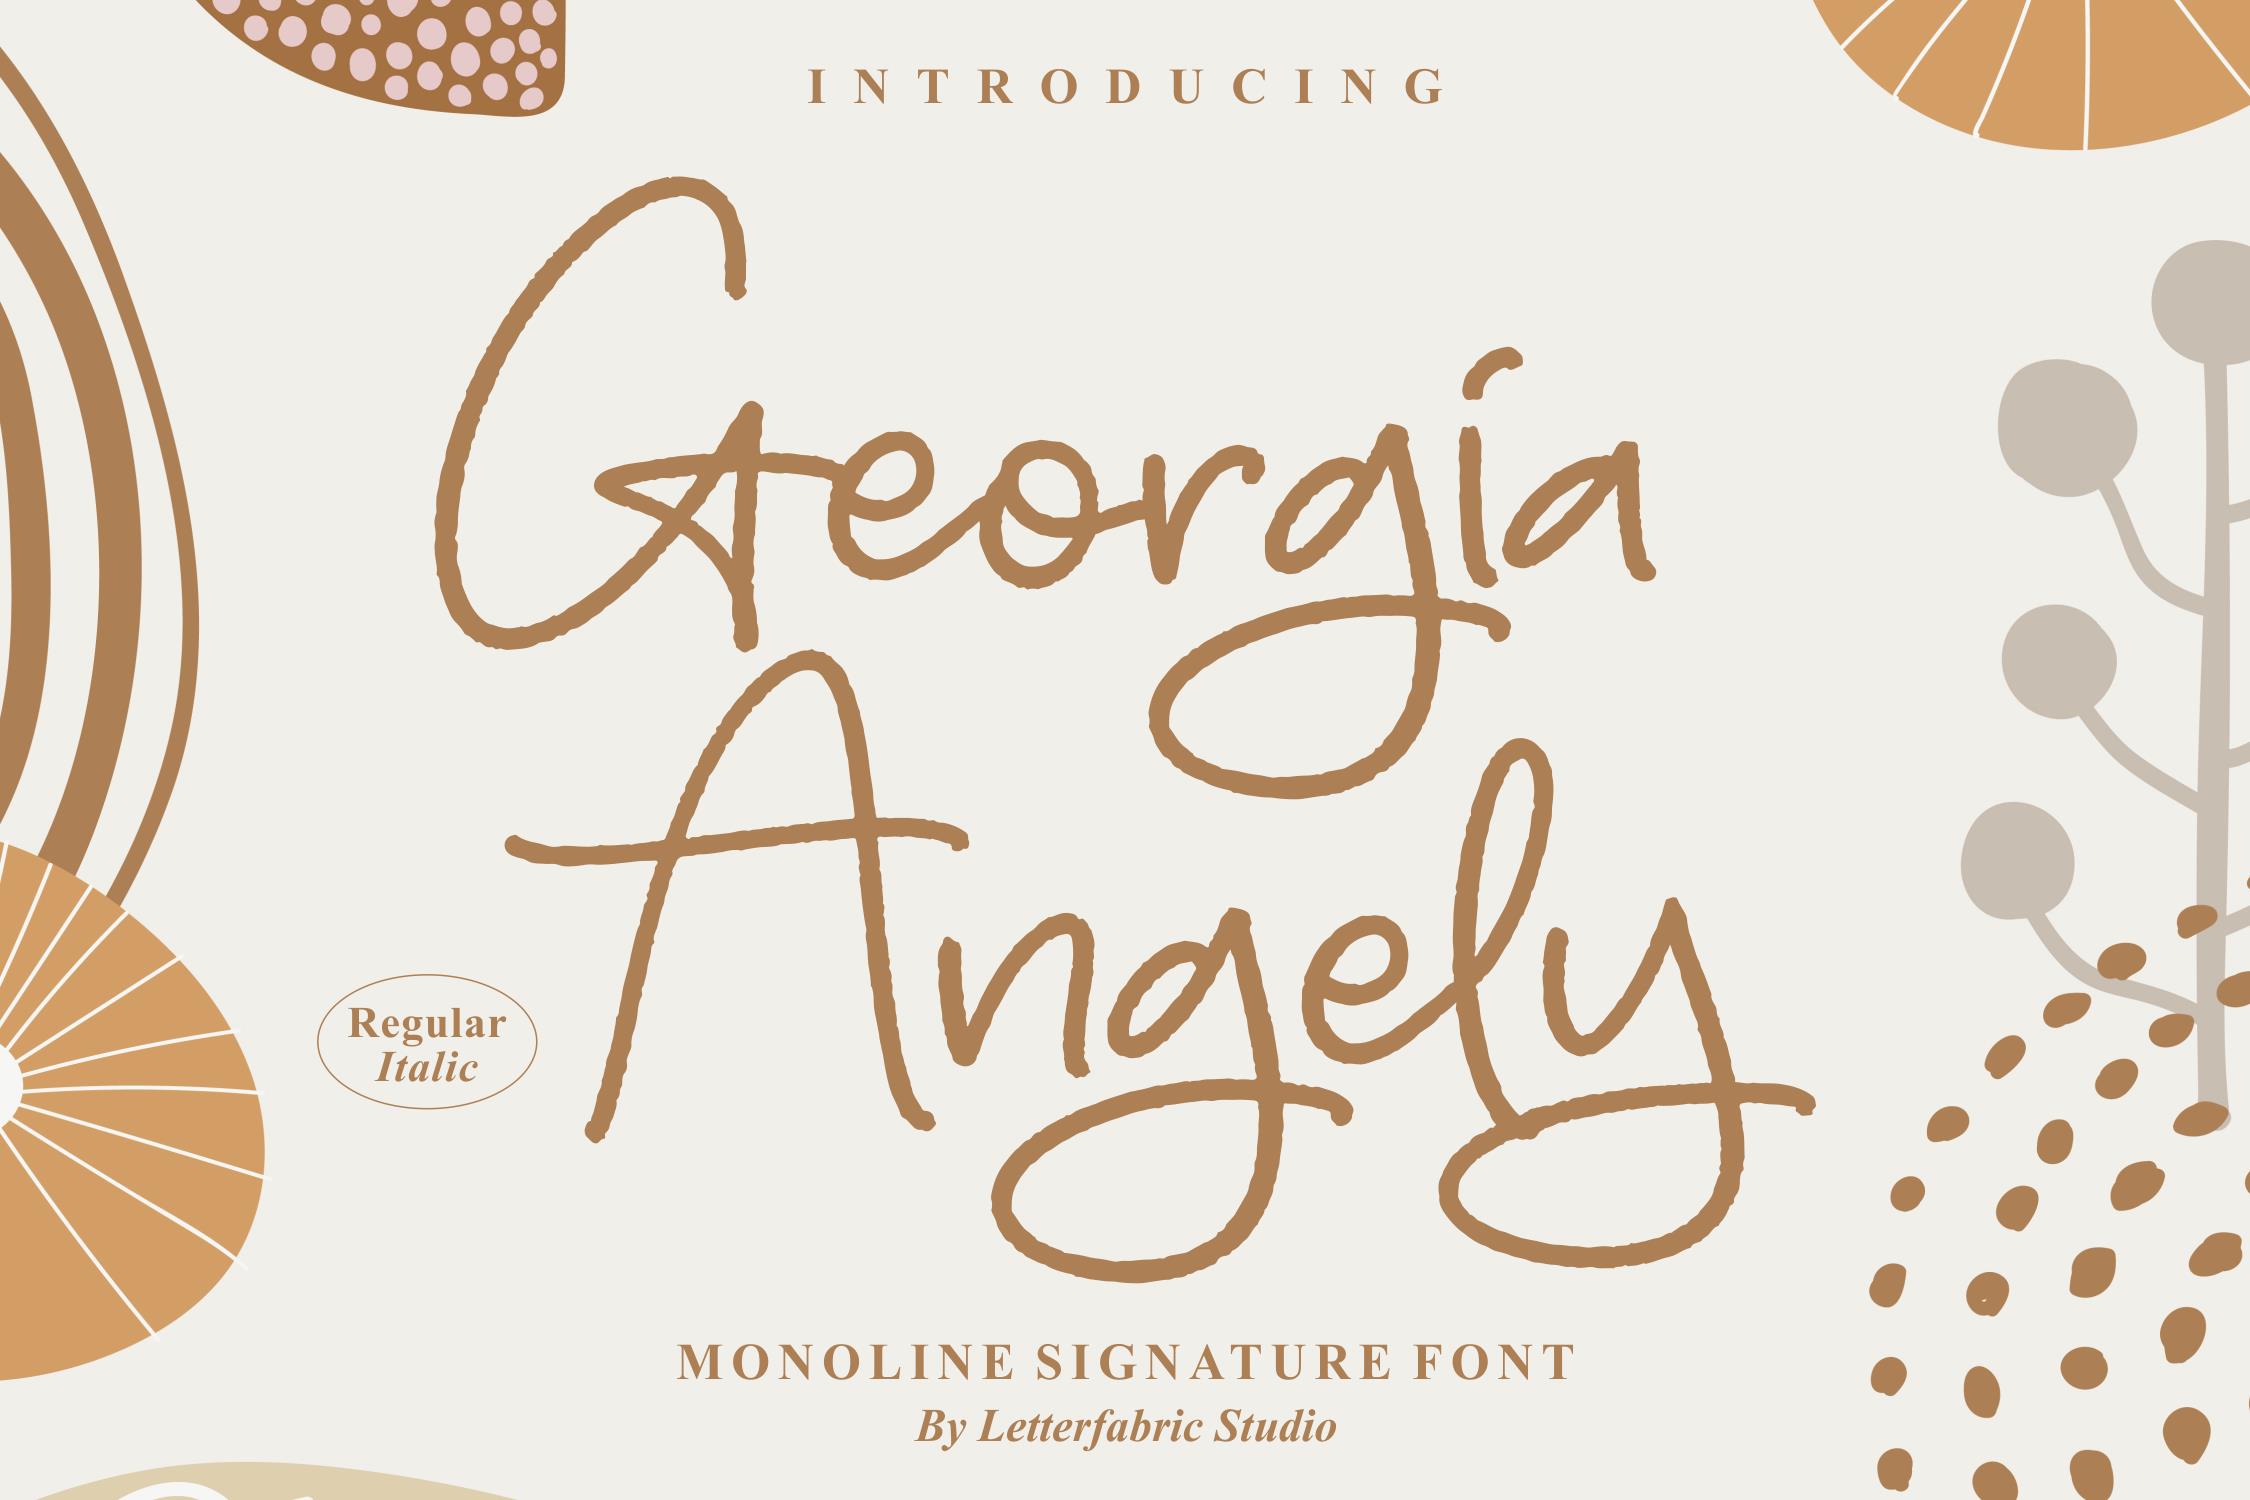 Georgia Angely